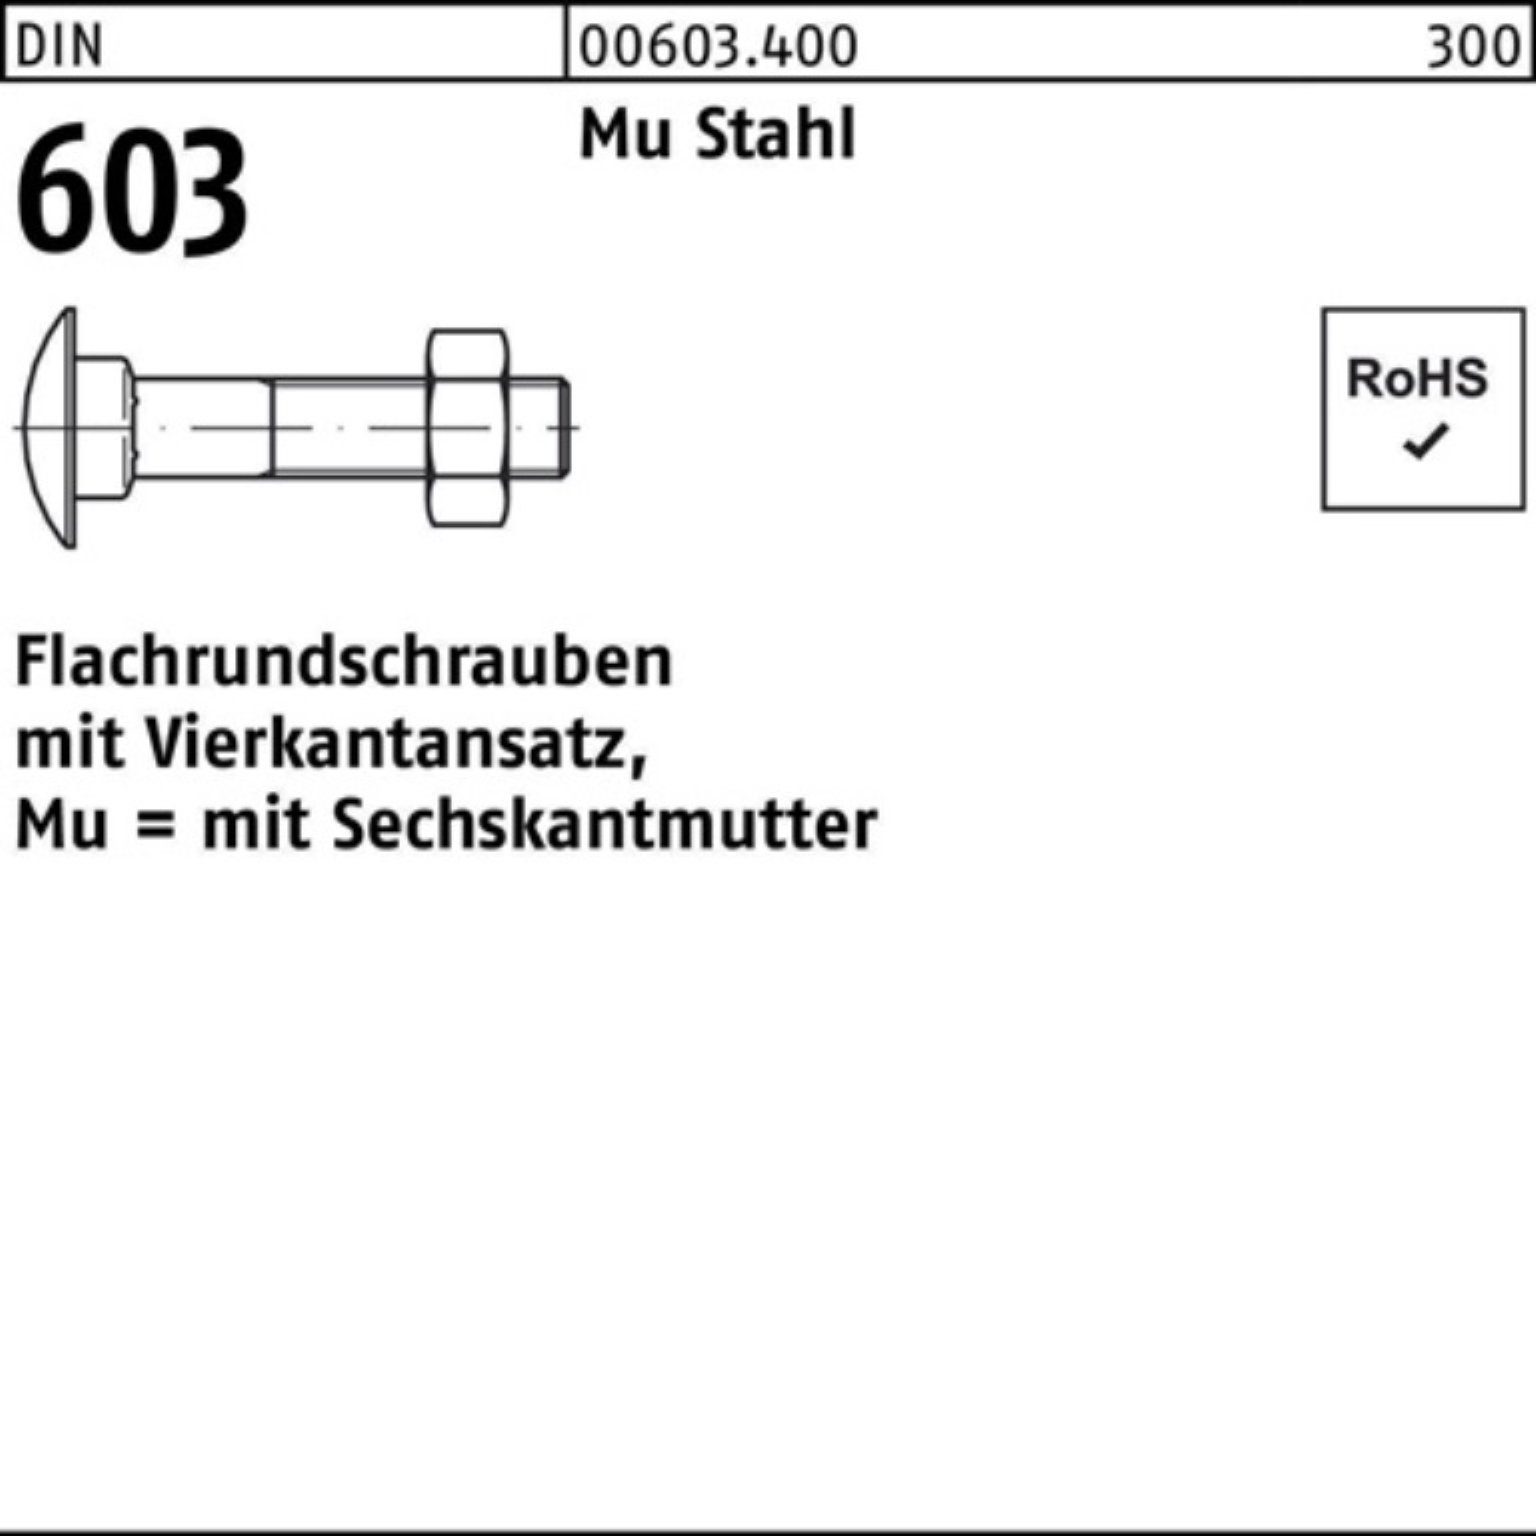 Schraube 200er Flachrundschraube DIN M Reyher Vierkantansatz/6-ktmutter M5x60 603 Pack